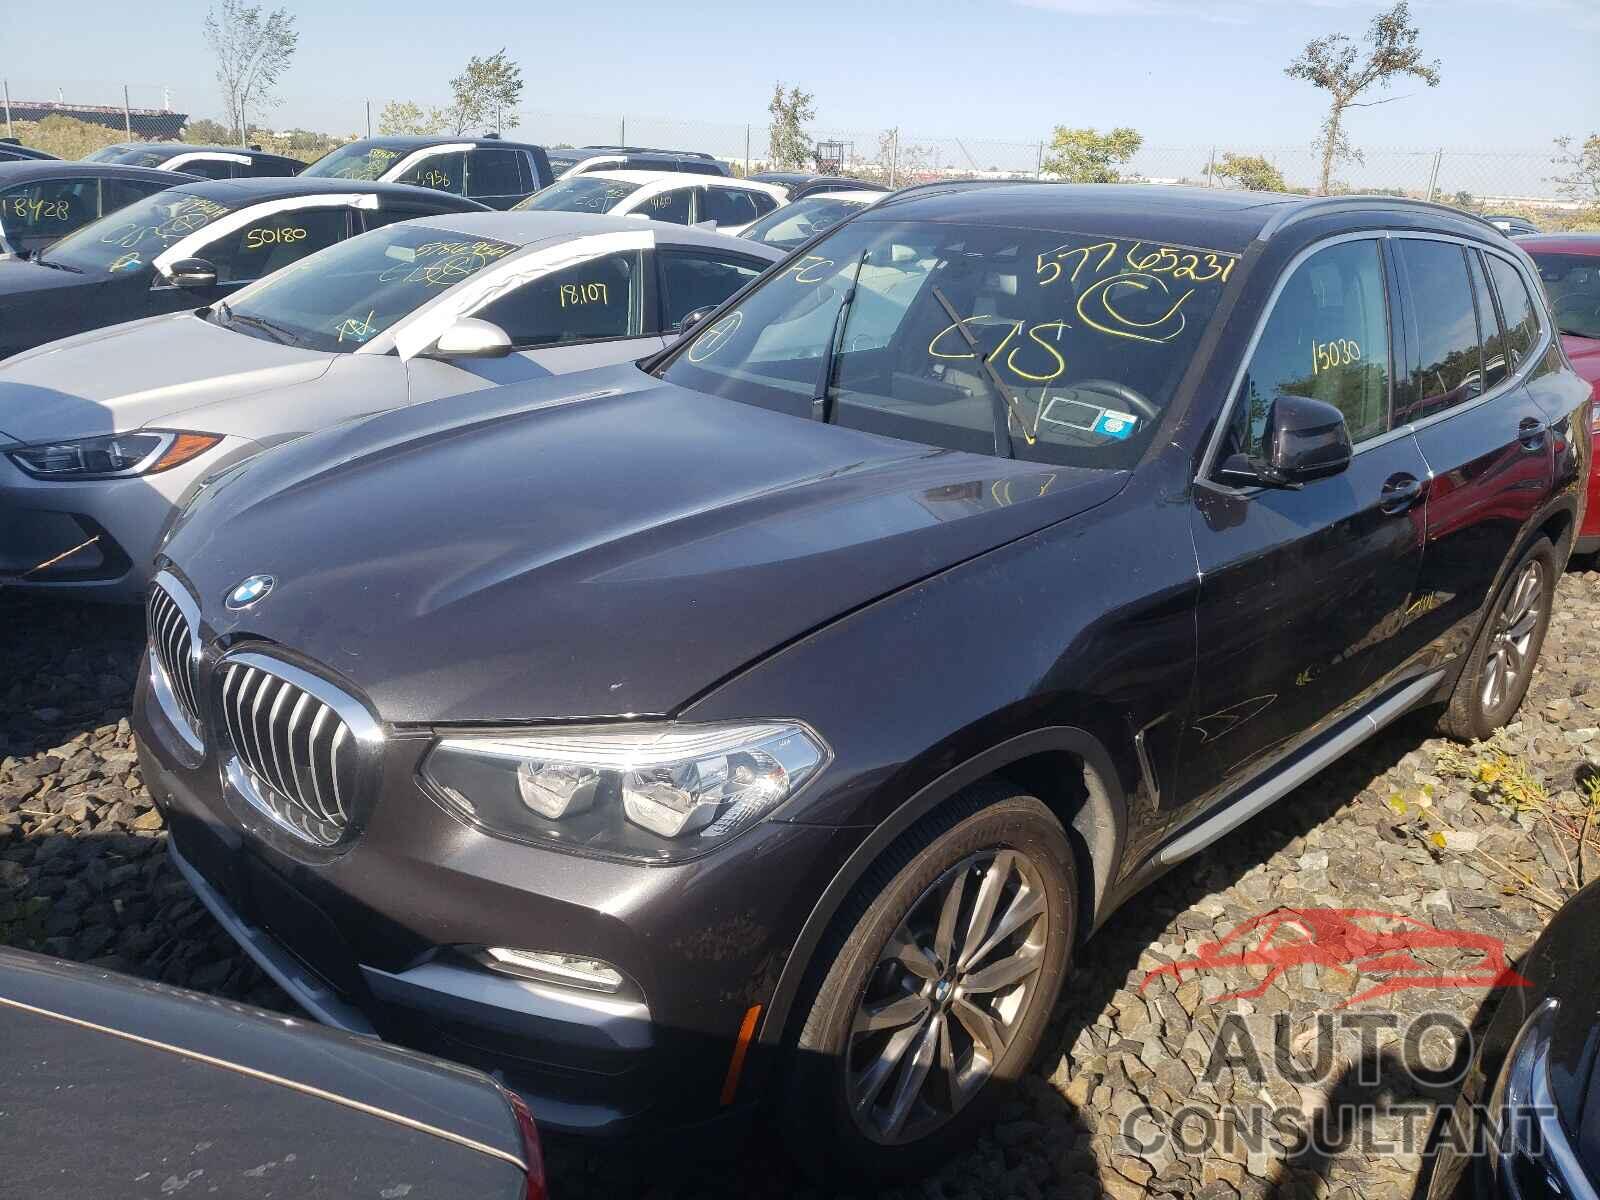 BMW X3 2019 - 5UXTR9C53KLP86651